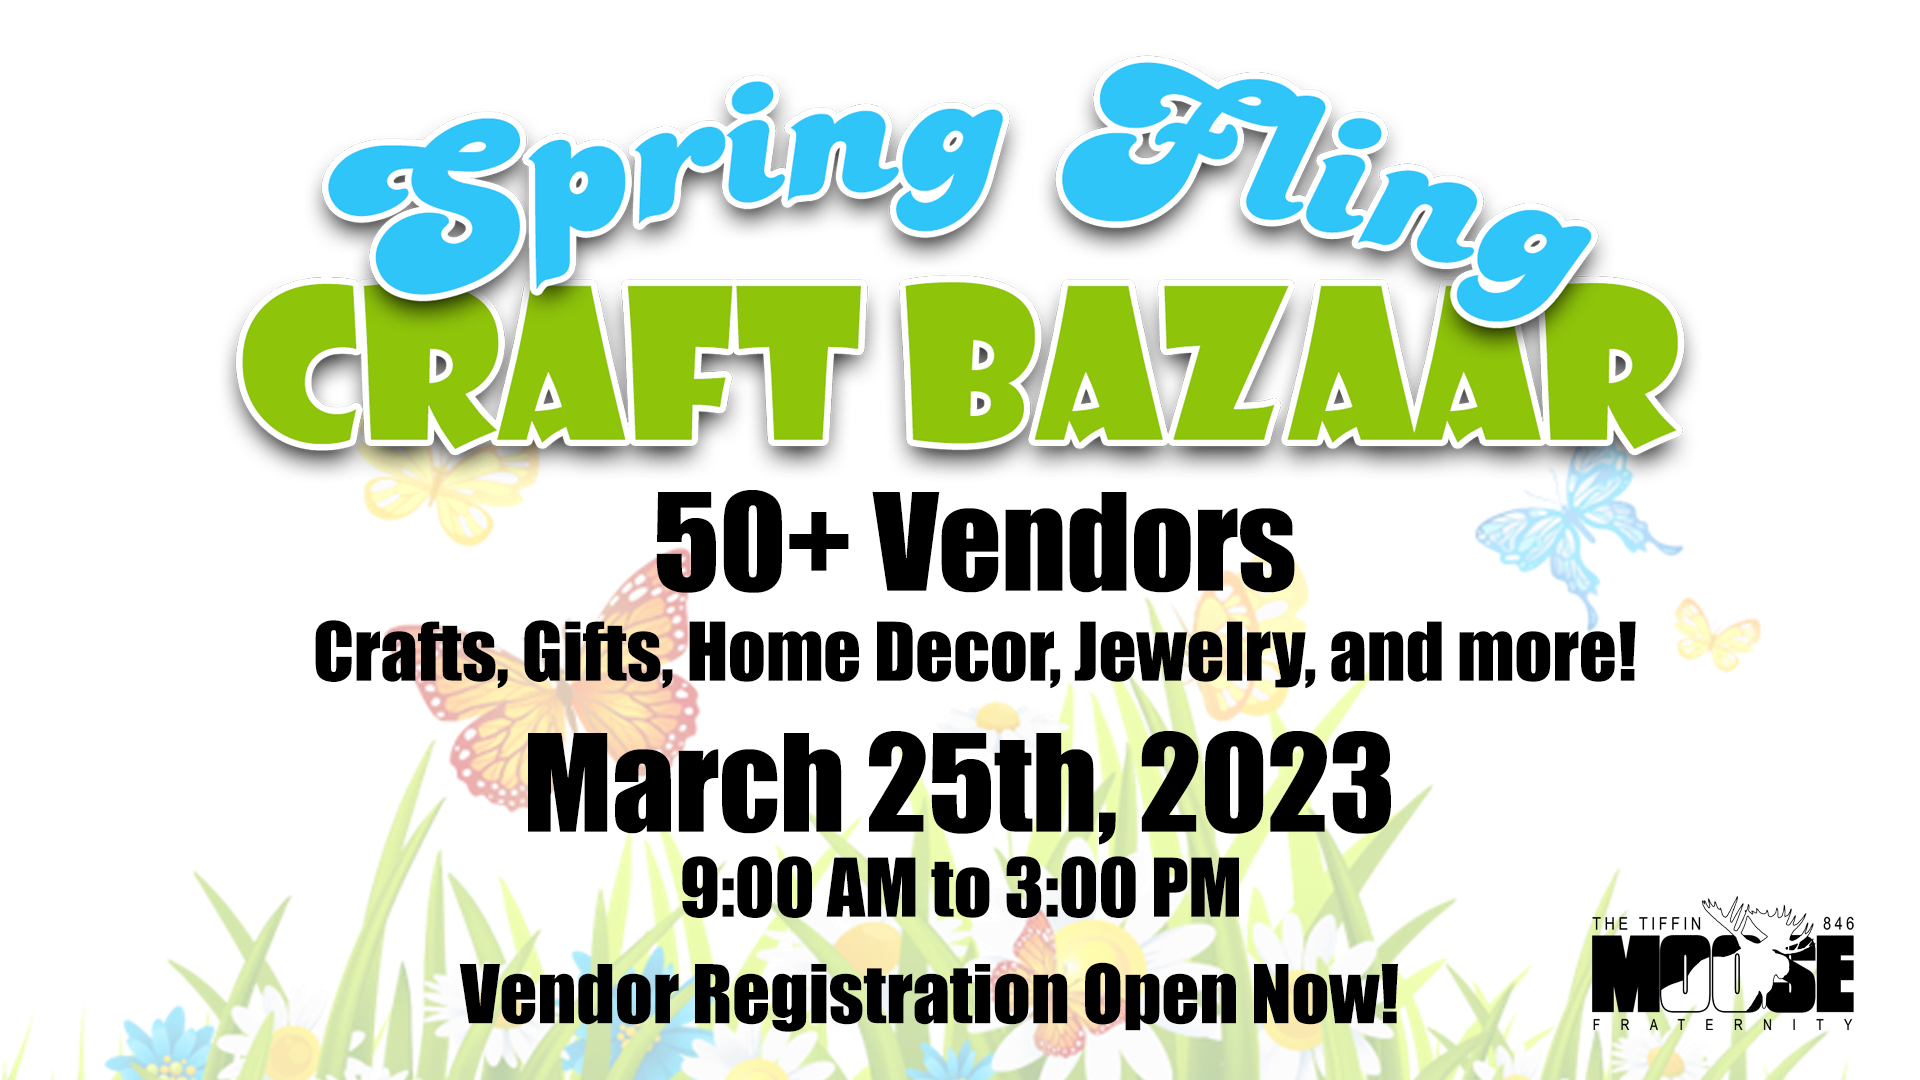 2023 Spring Fling Craft Bazaar at The Tiffin Moose